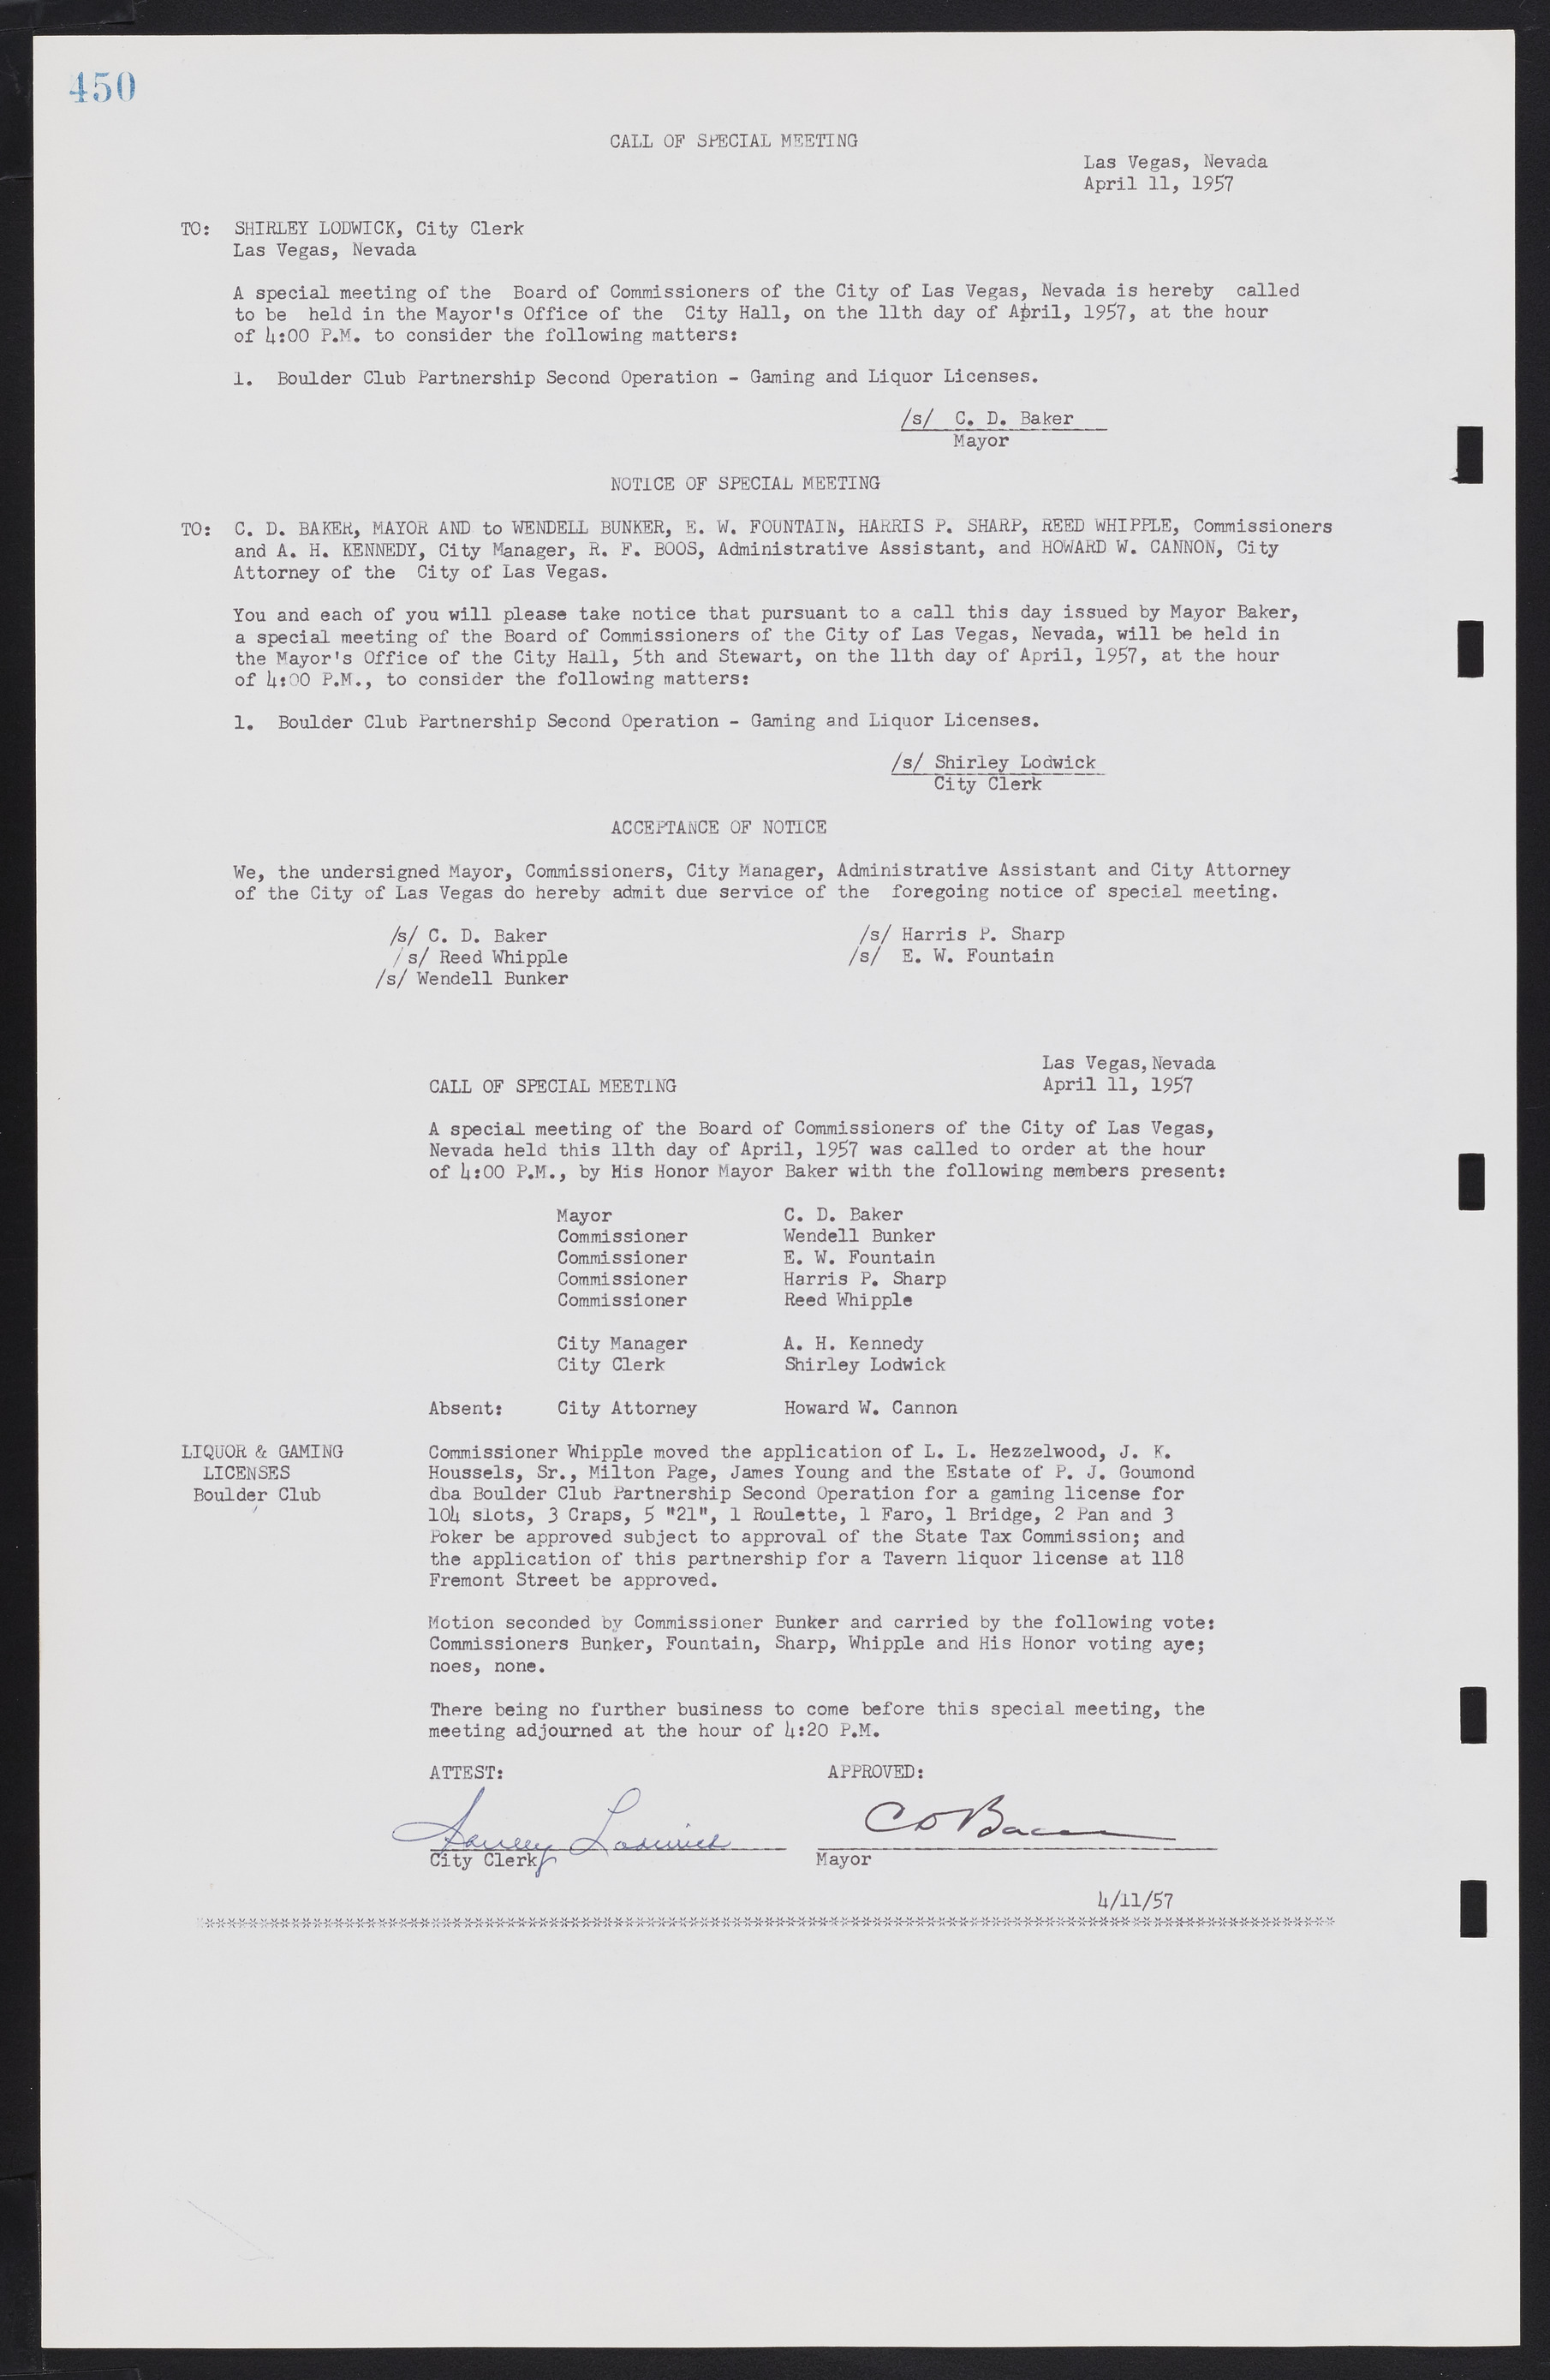 Las Vegas City Commission Minutes, September 21, 1955 to November 20, 1957, lvc000010-470